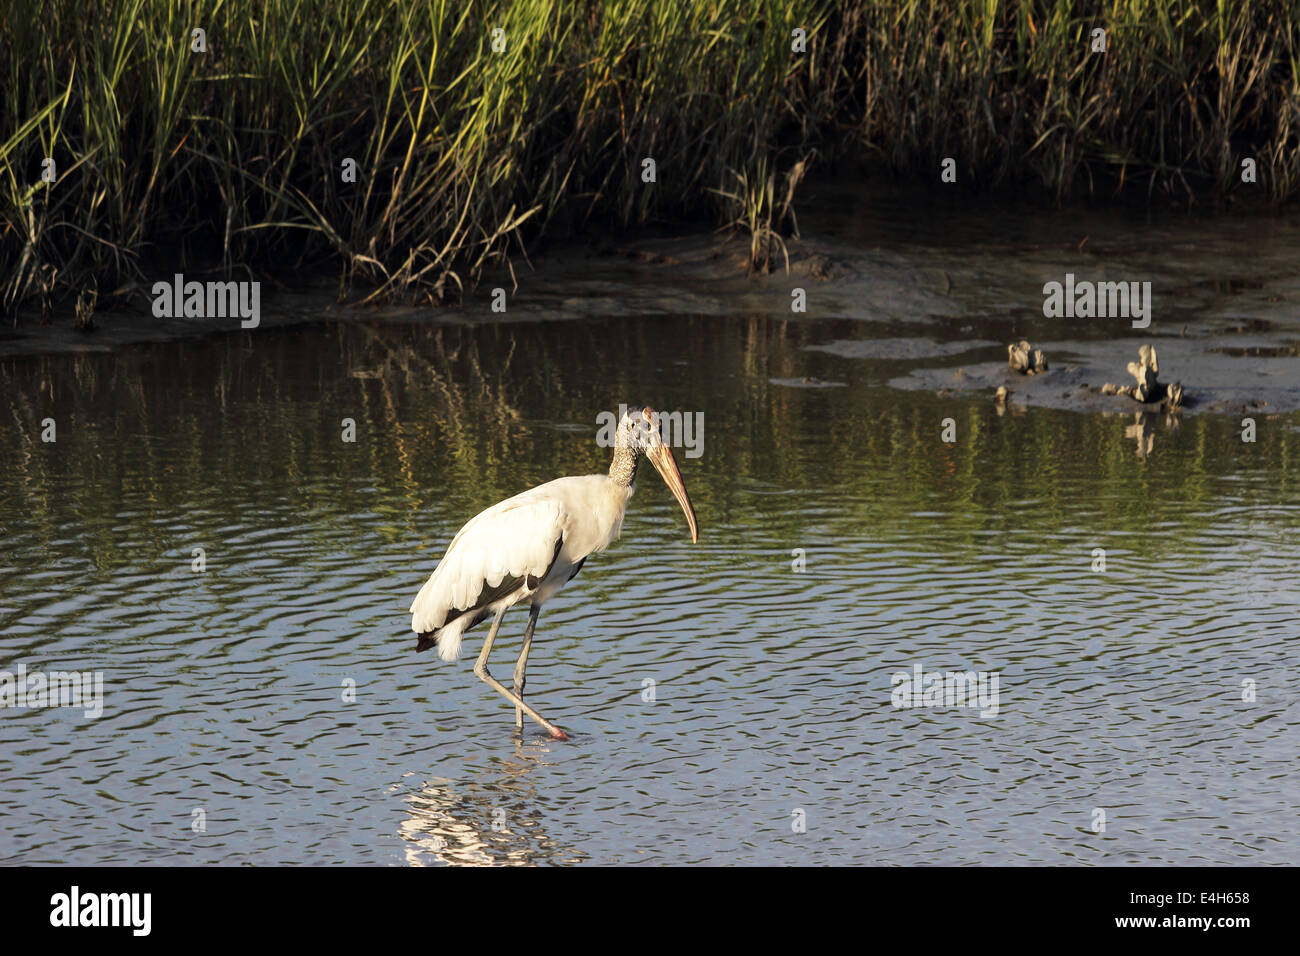 An American Wood Stork wades in a coastal wetland Stock Photo